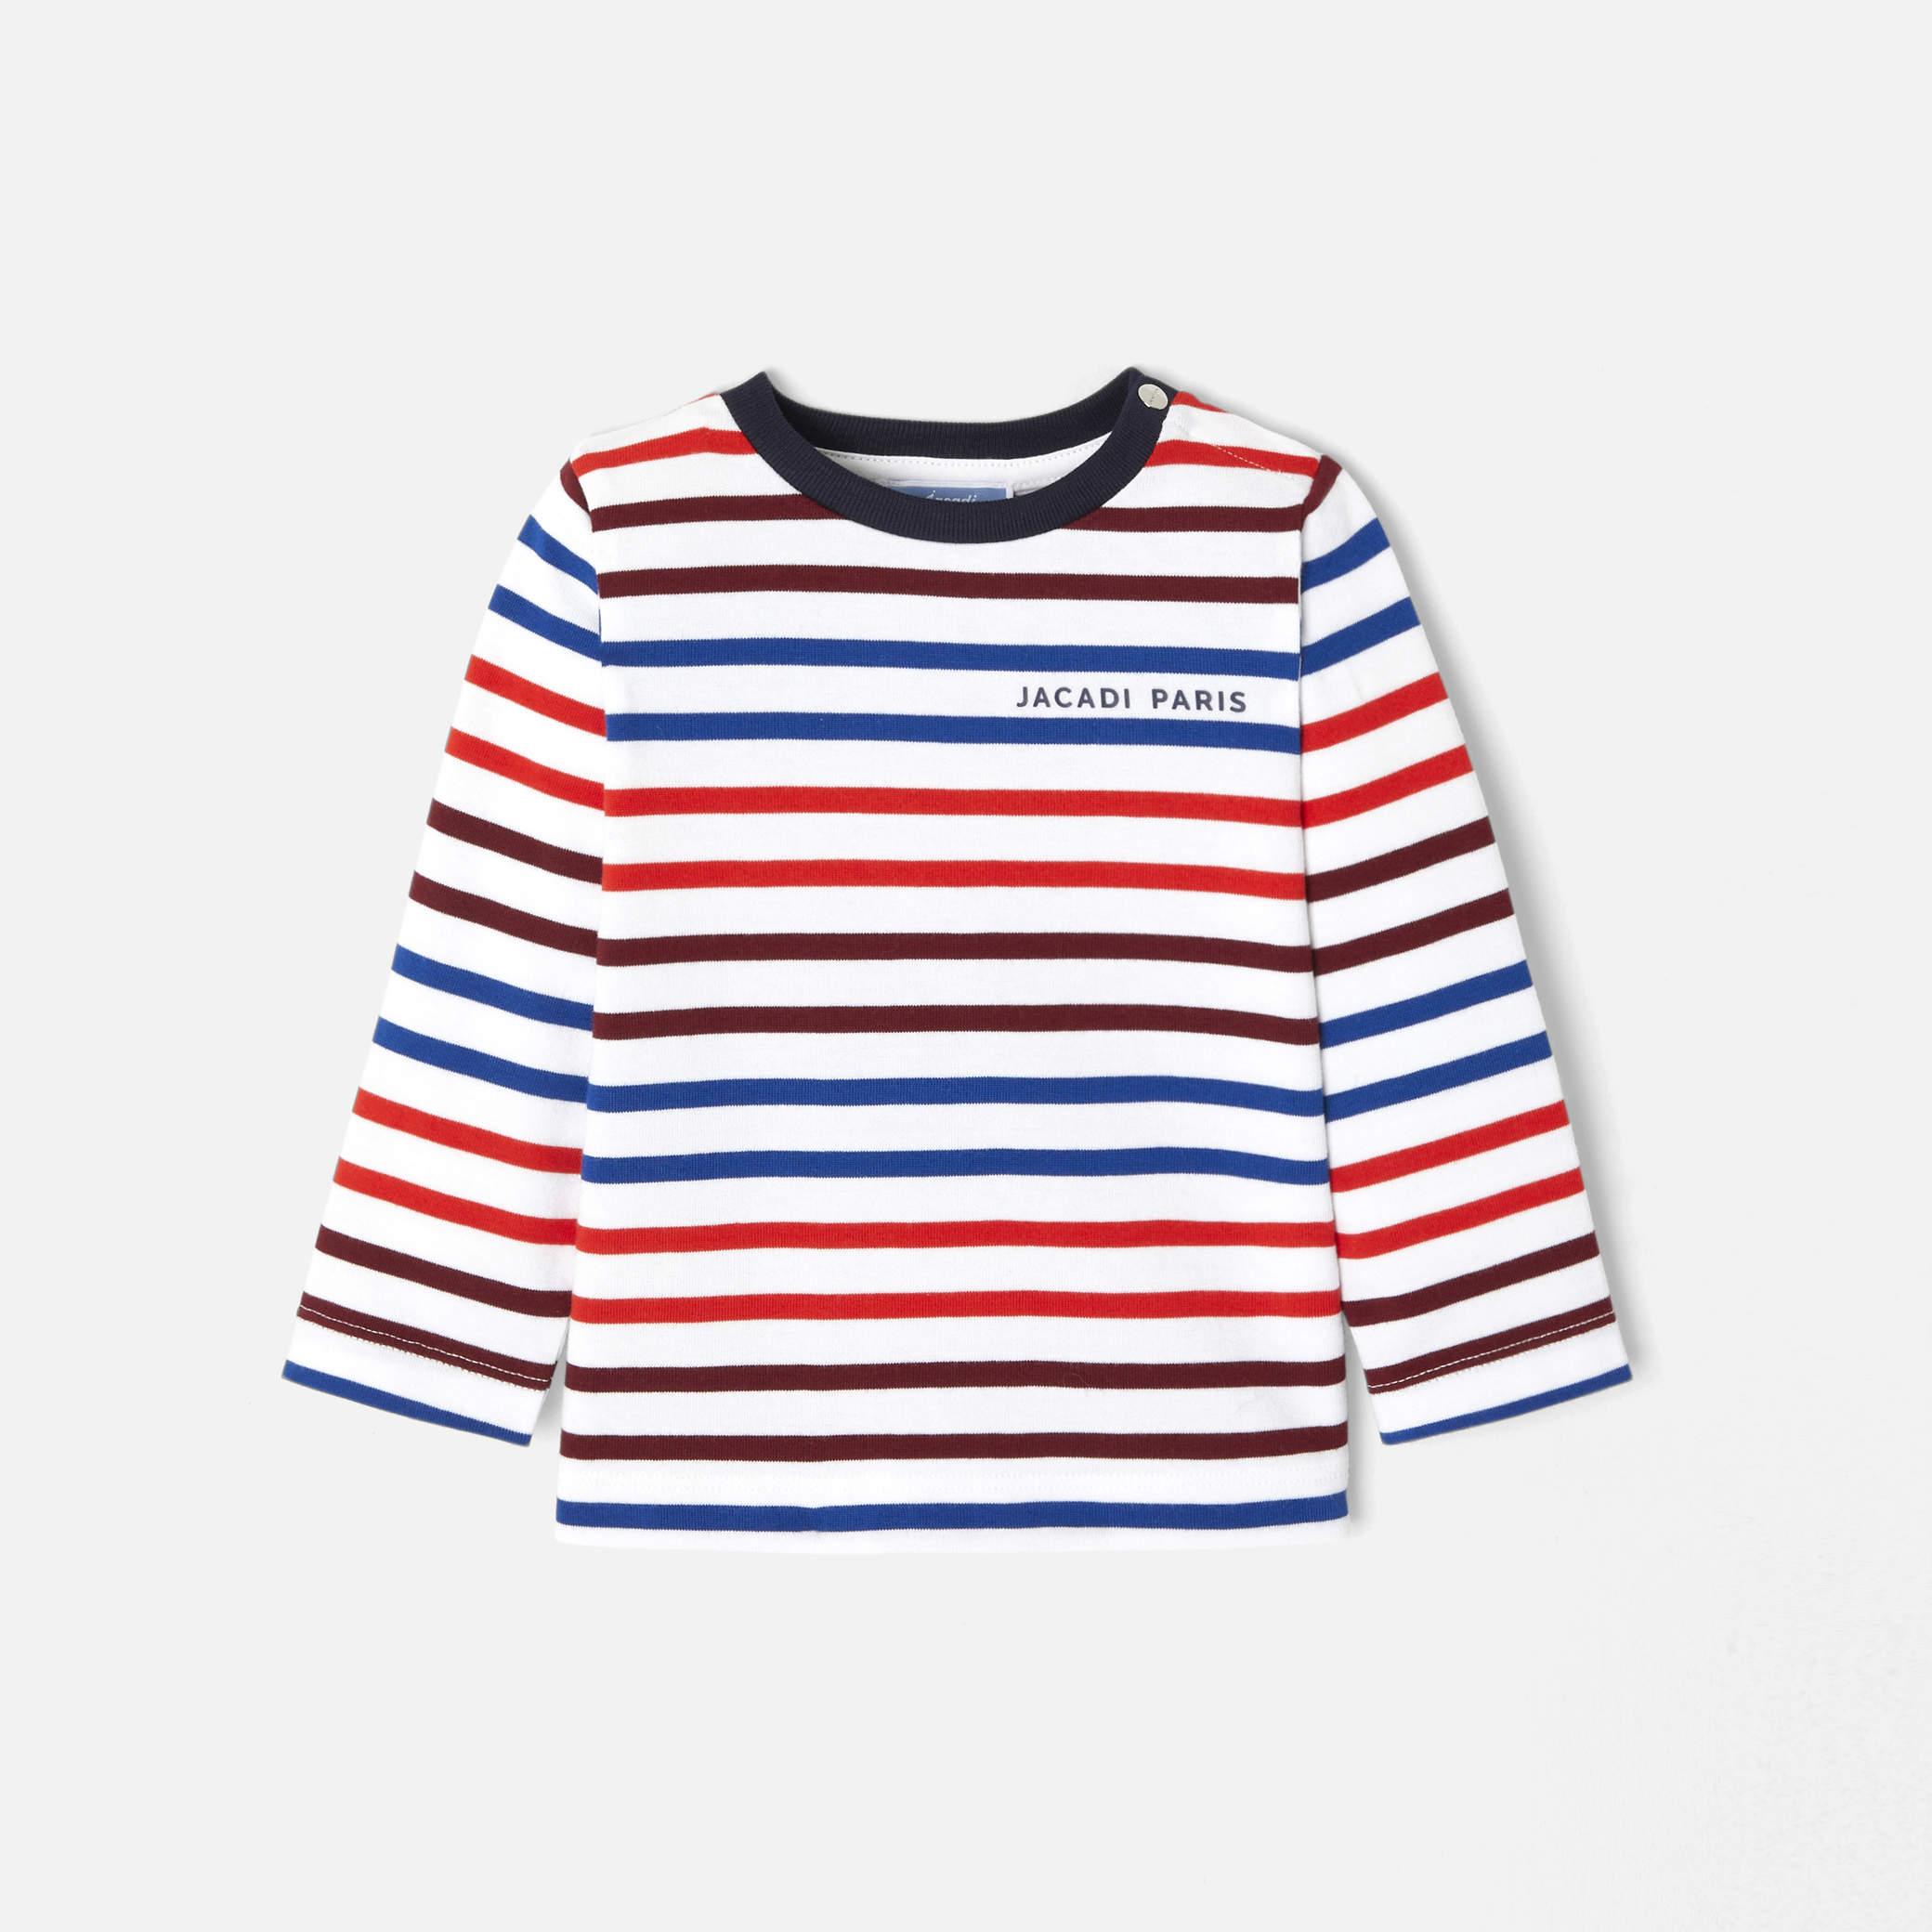 Baby boy sailor t-shirt